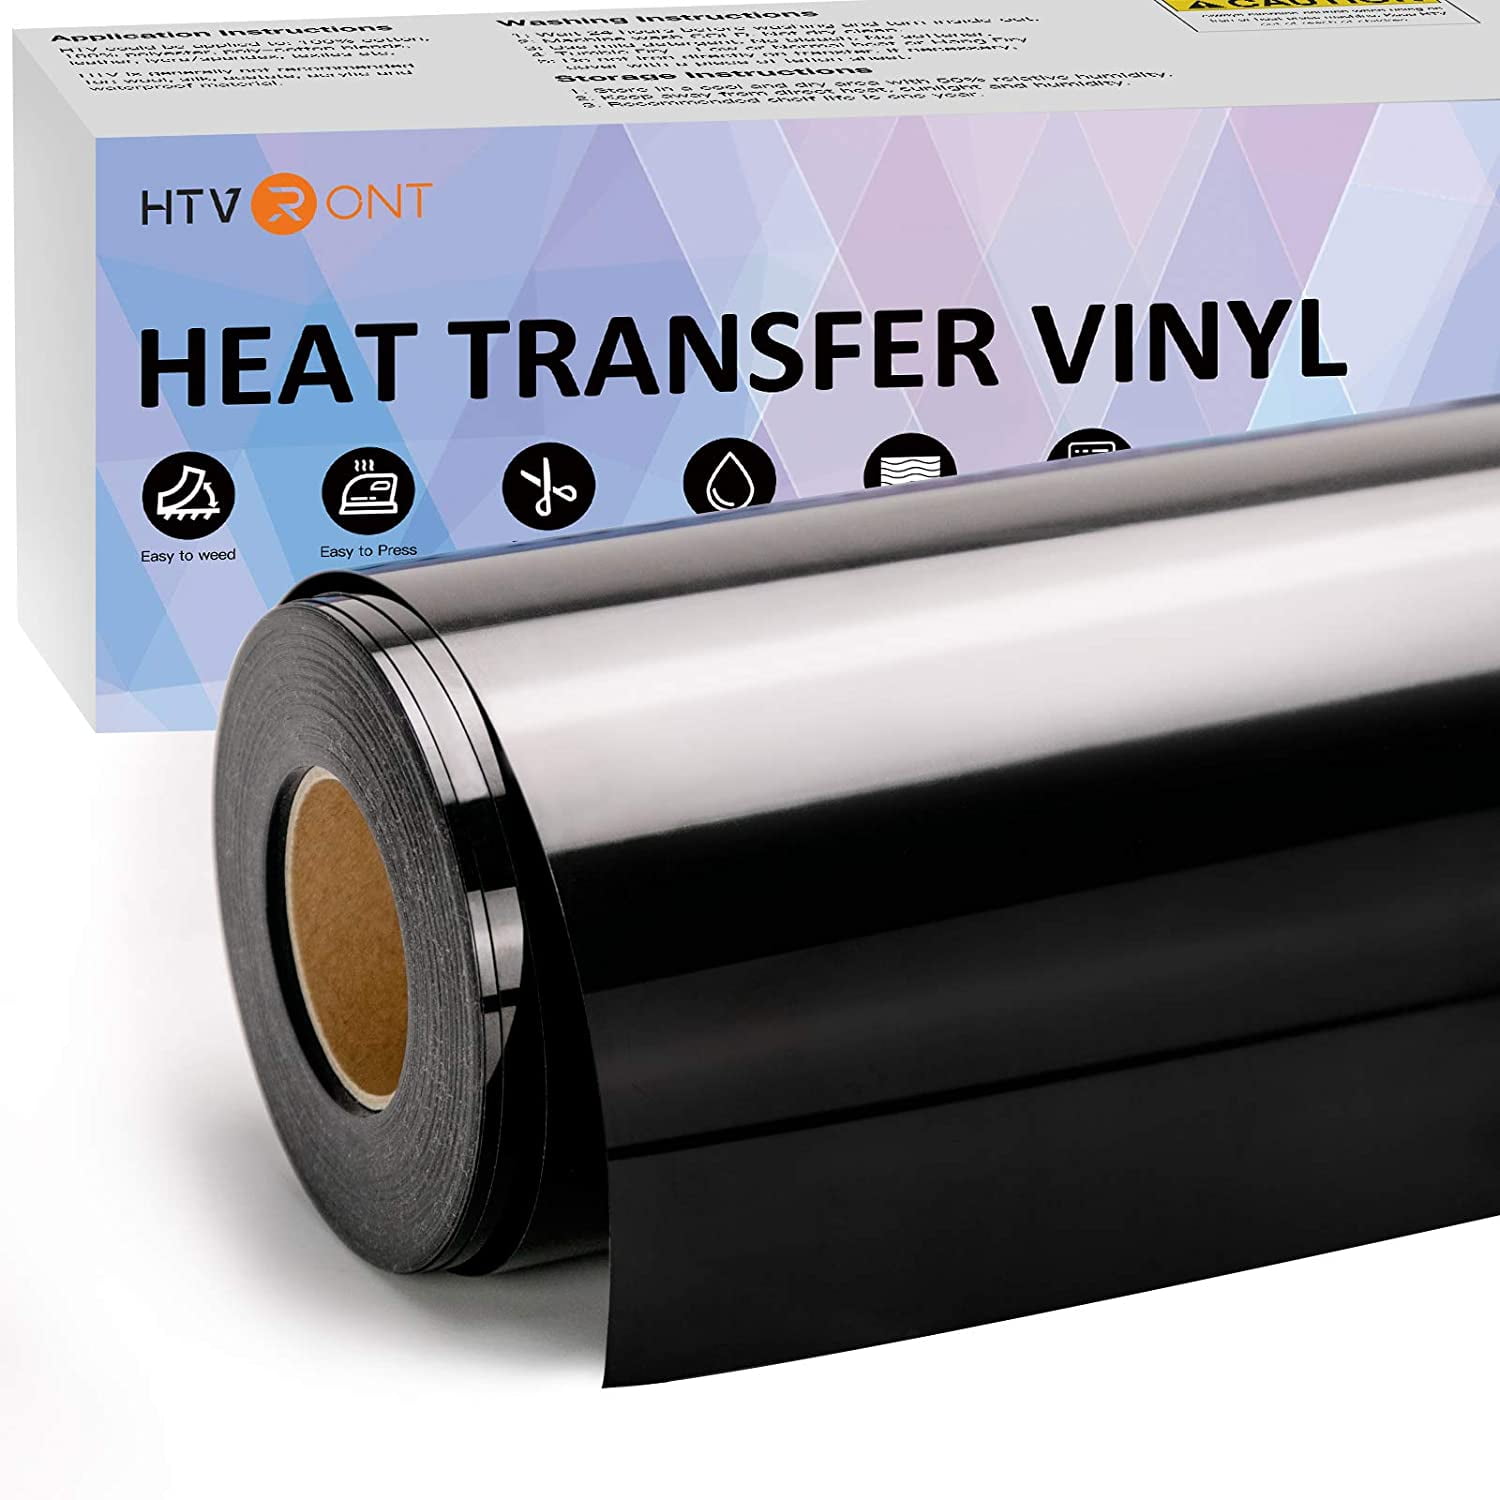  XSEINO White and Black Heat Transfer Vinyl Roll, 12 x 25ft -  2Rolls HTV Vinyl Roll with Teflon for Shirts, Iron on Vinyl for Cricut &  Cameo - Easy to Cut